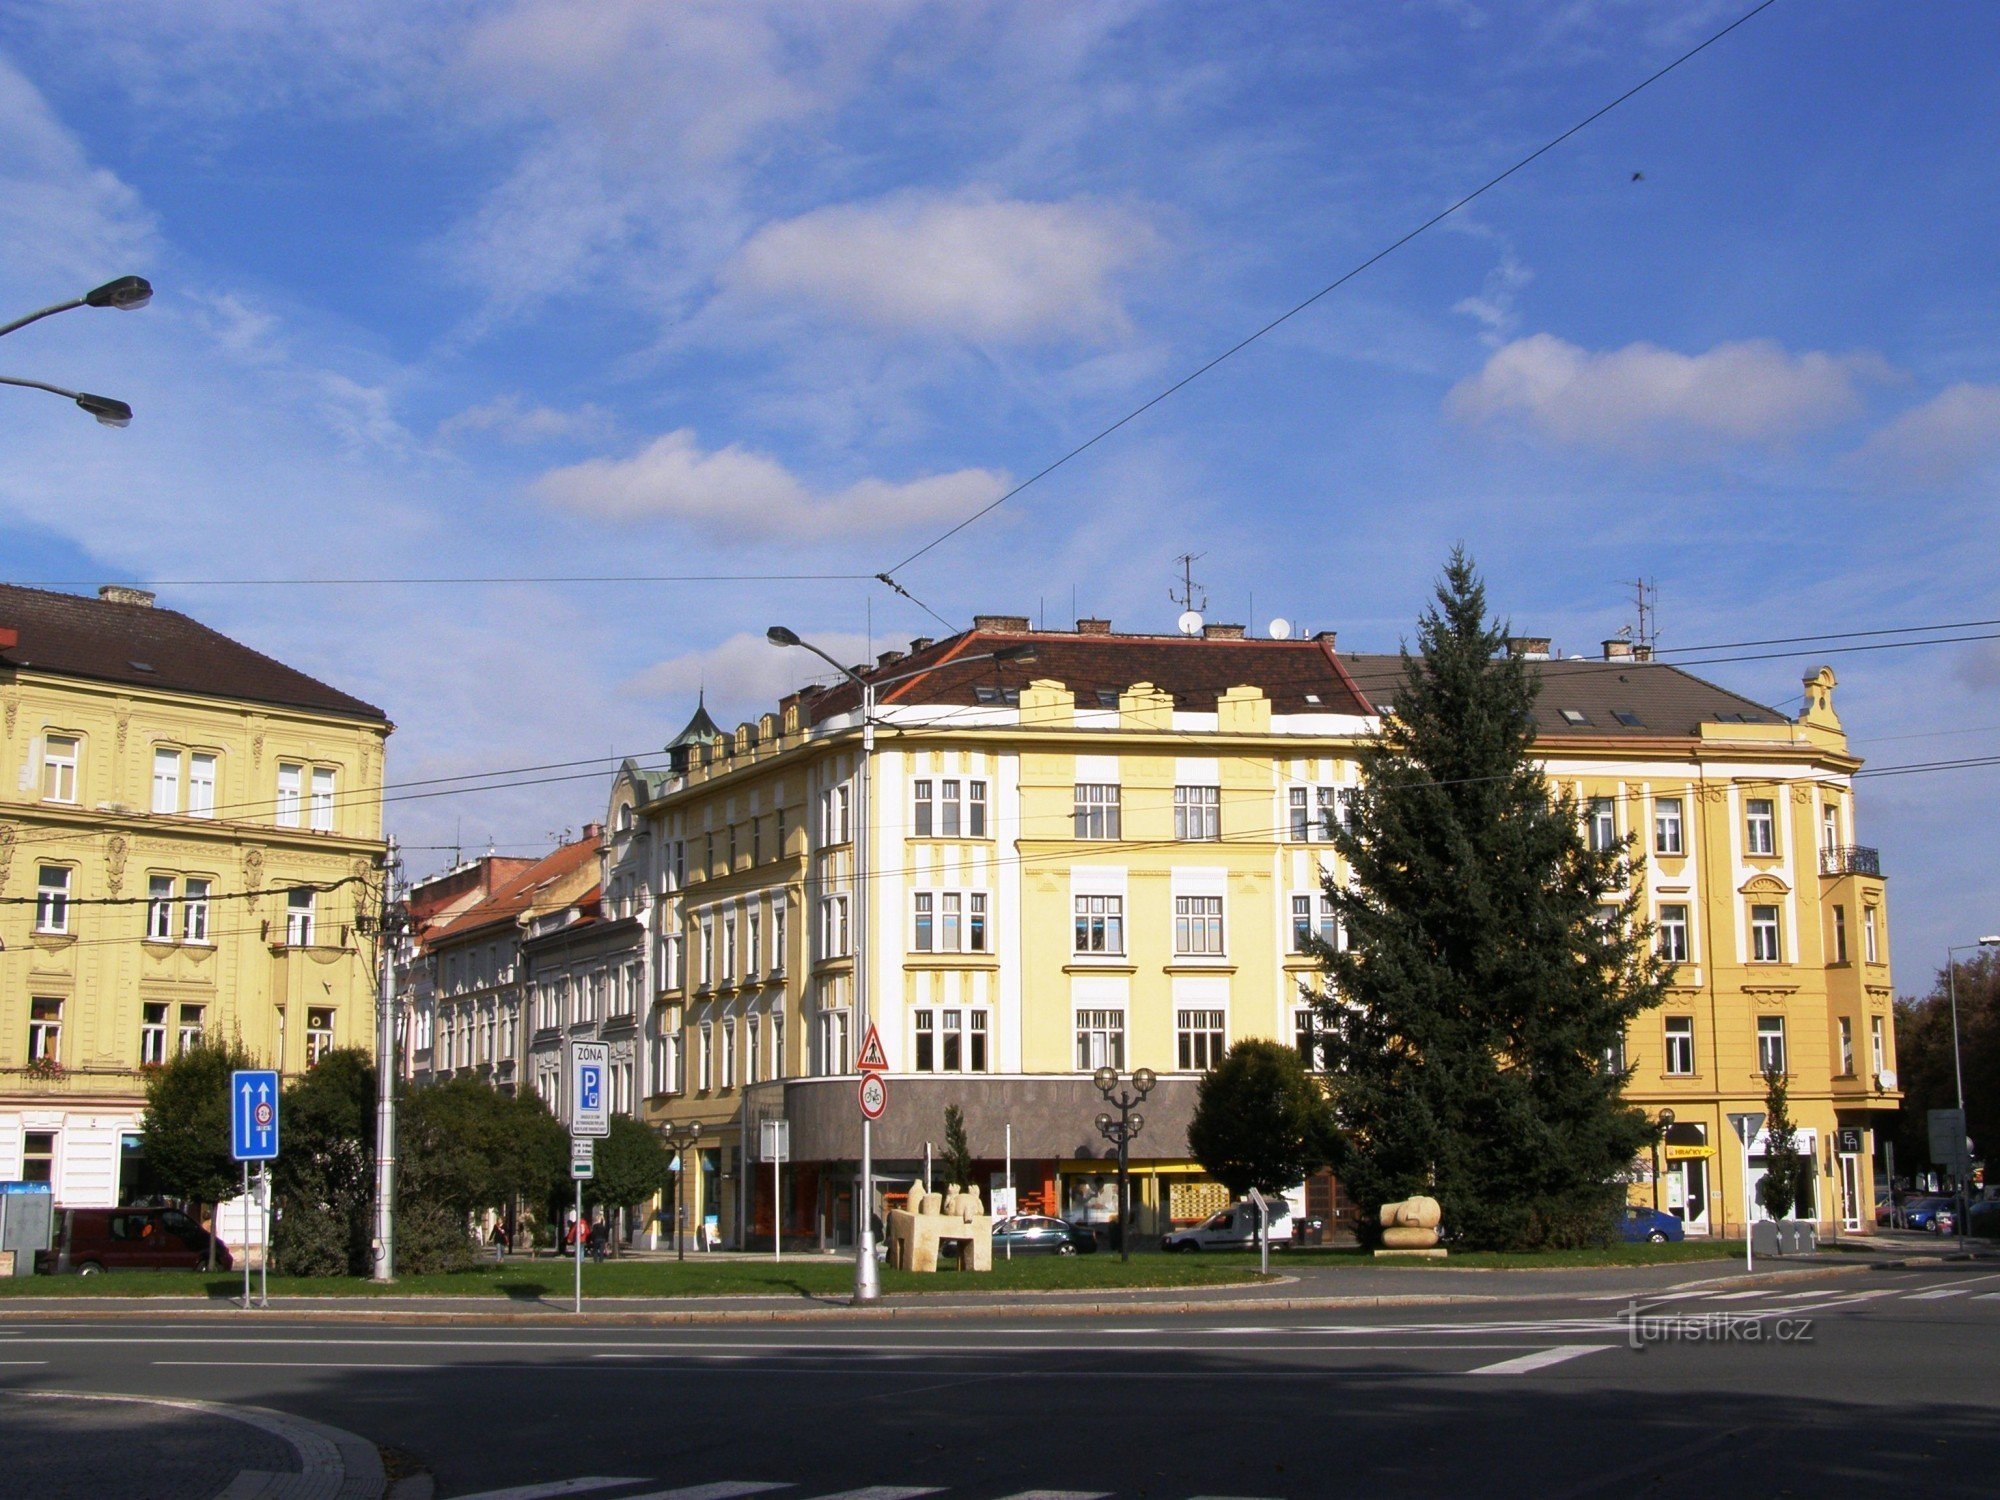 Hradec Králové - 自由广场